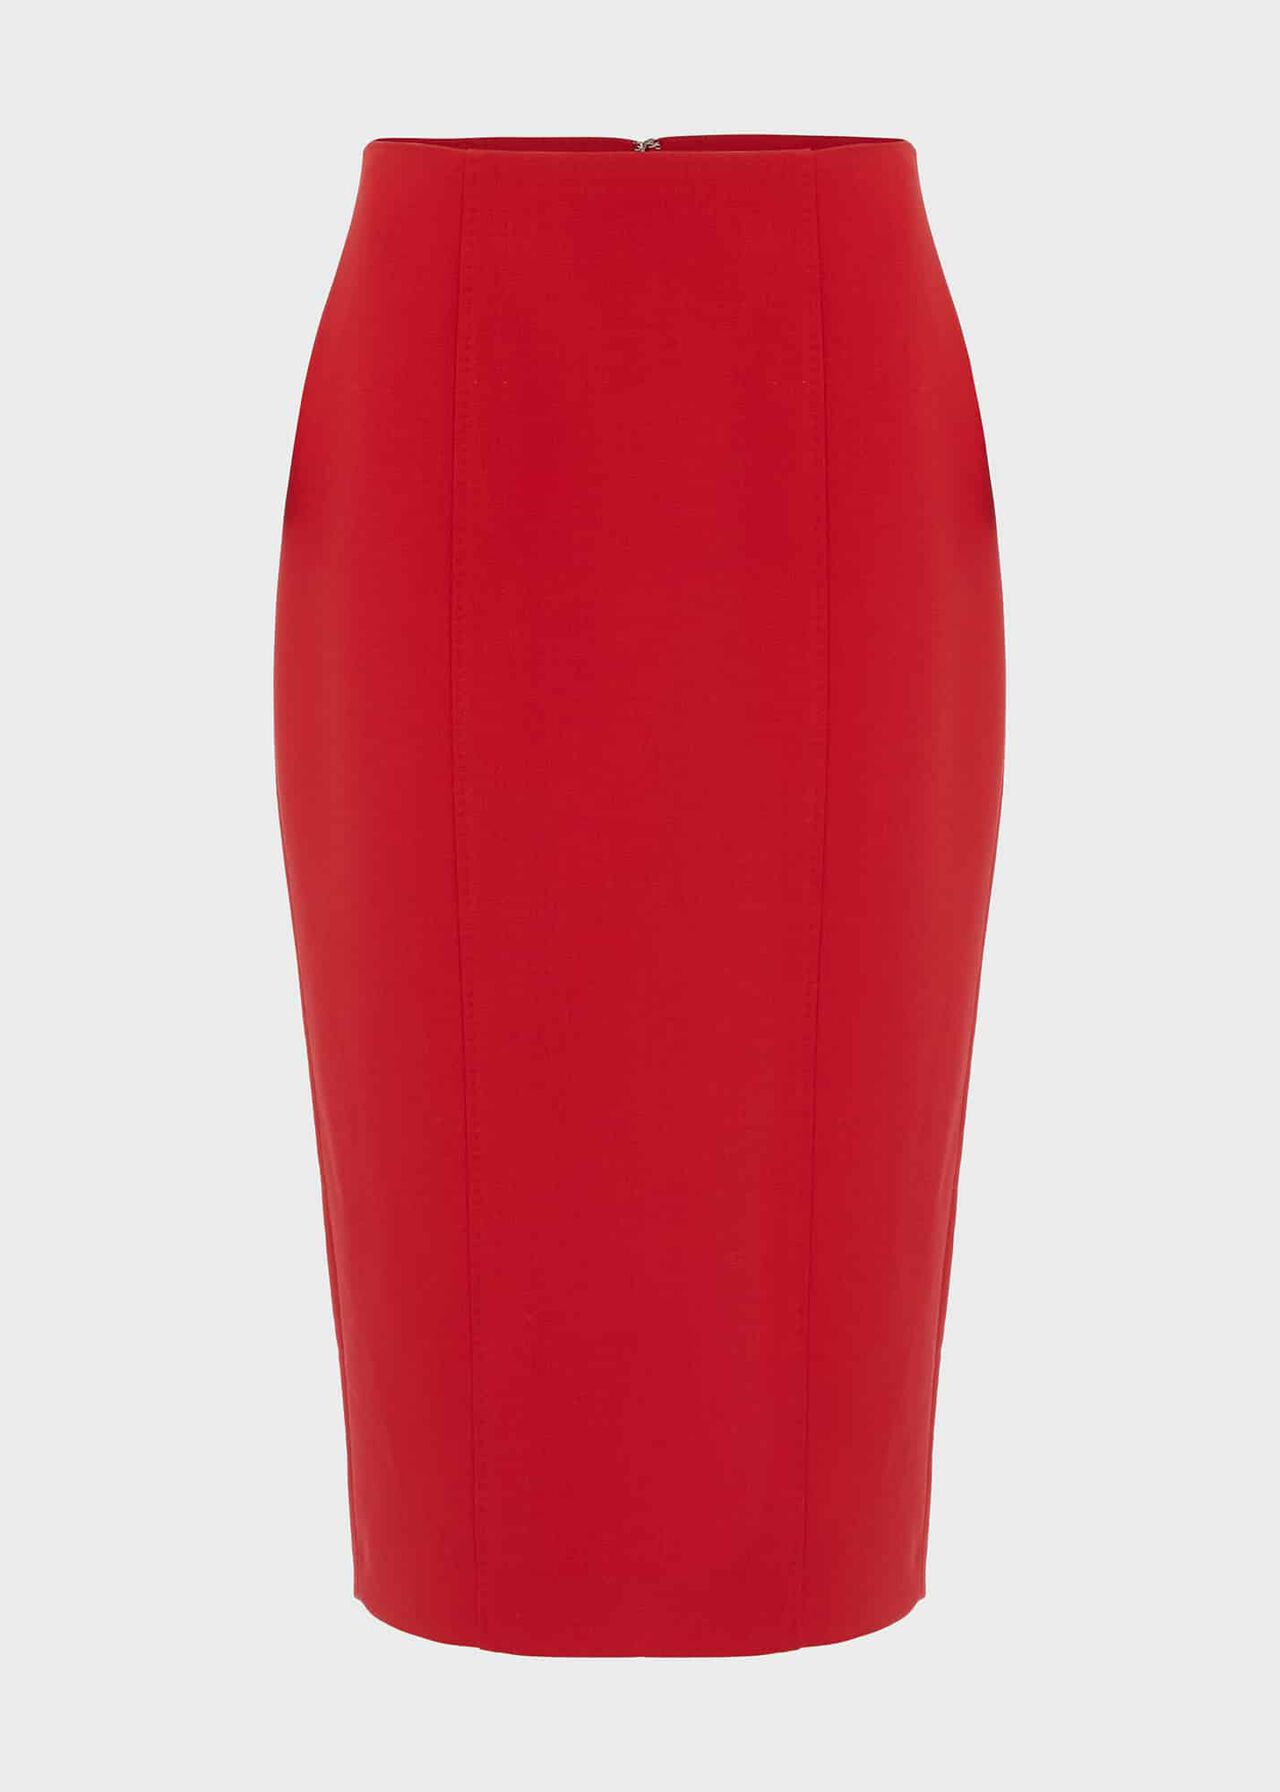 Beatrix Pencil Skirt, Scarlet Red, hi-res